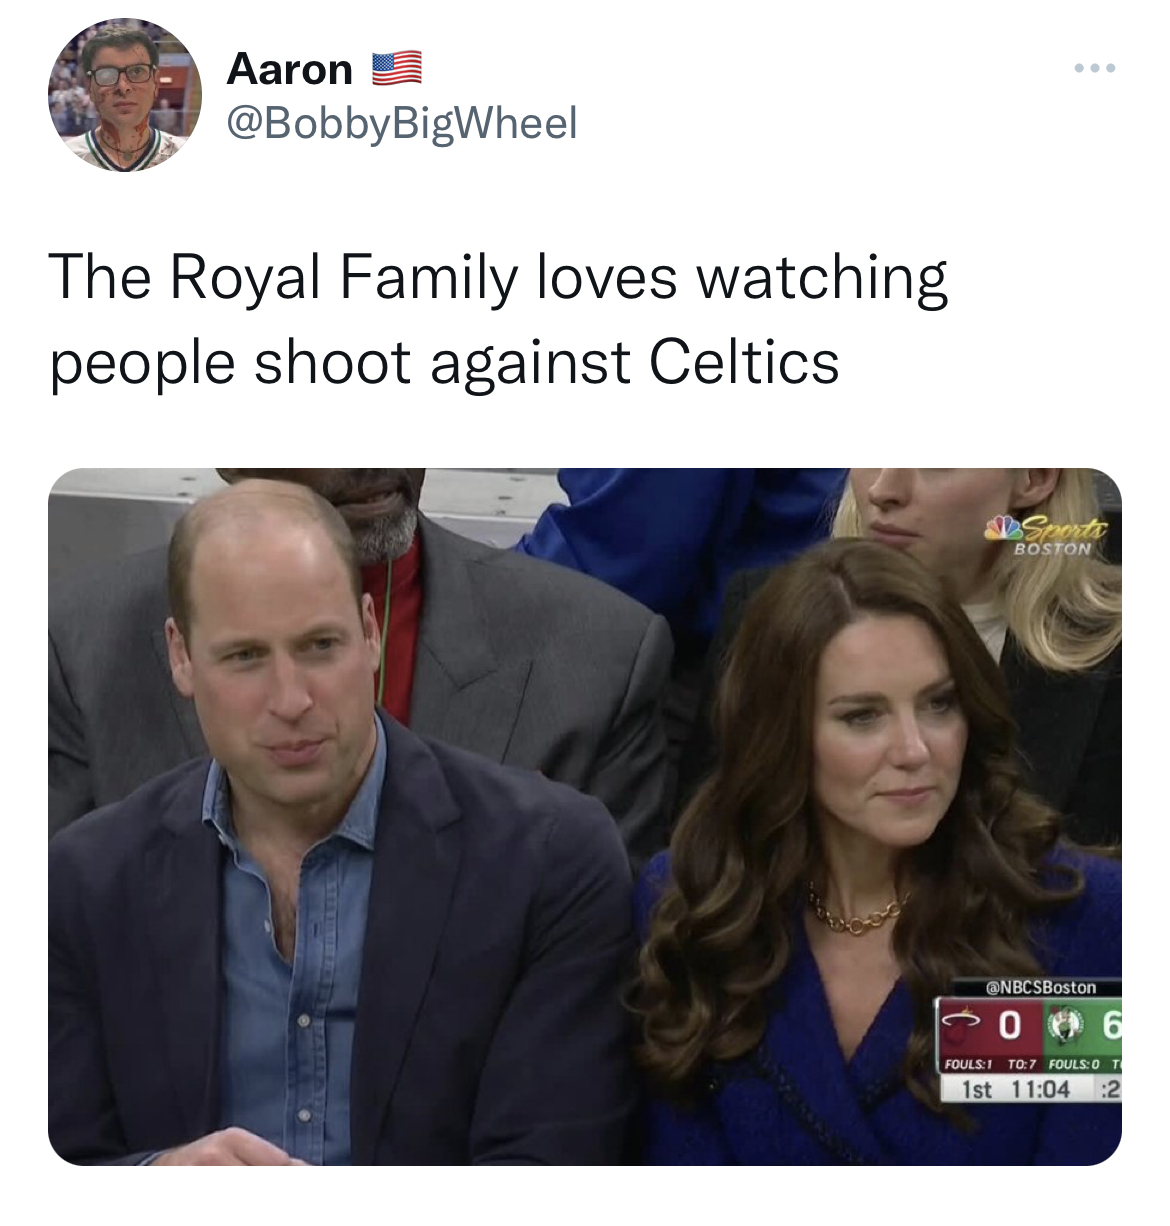 tweets roasting celebs - conversation - Aaron The Royal Family loves watching people shoot against Celtics Sorte Boston GNBCSBoston 06 Pouls TO7 Folls T 1st 2